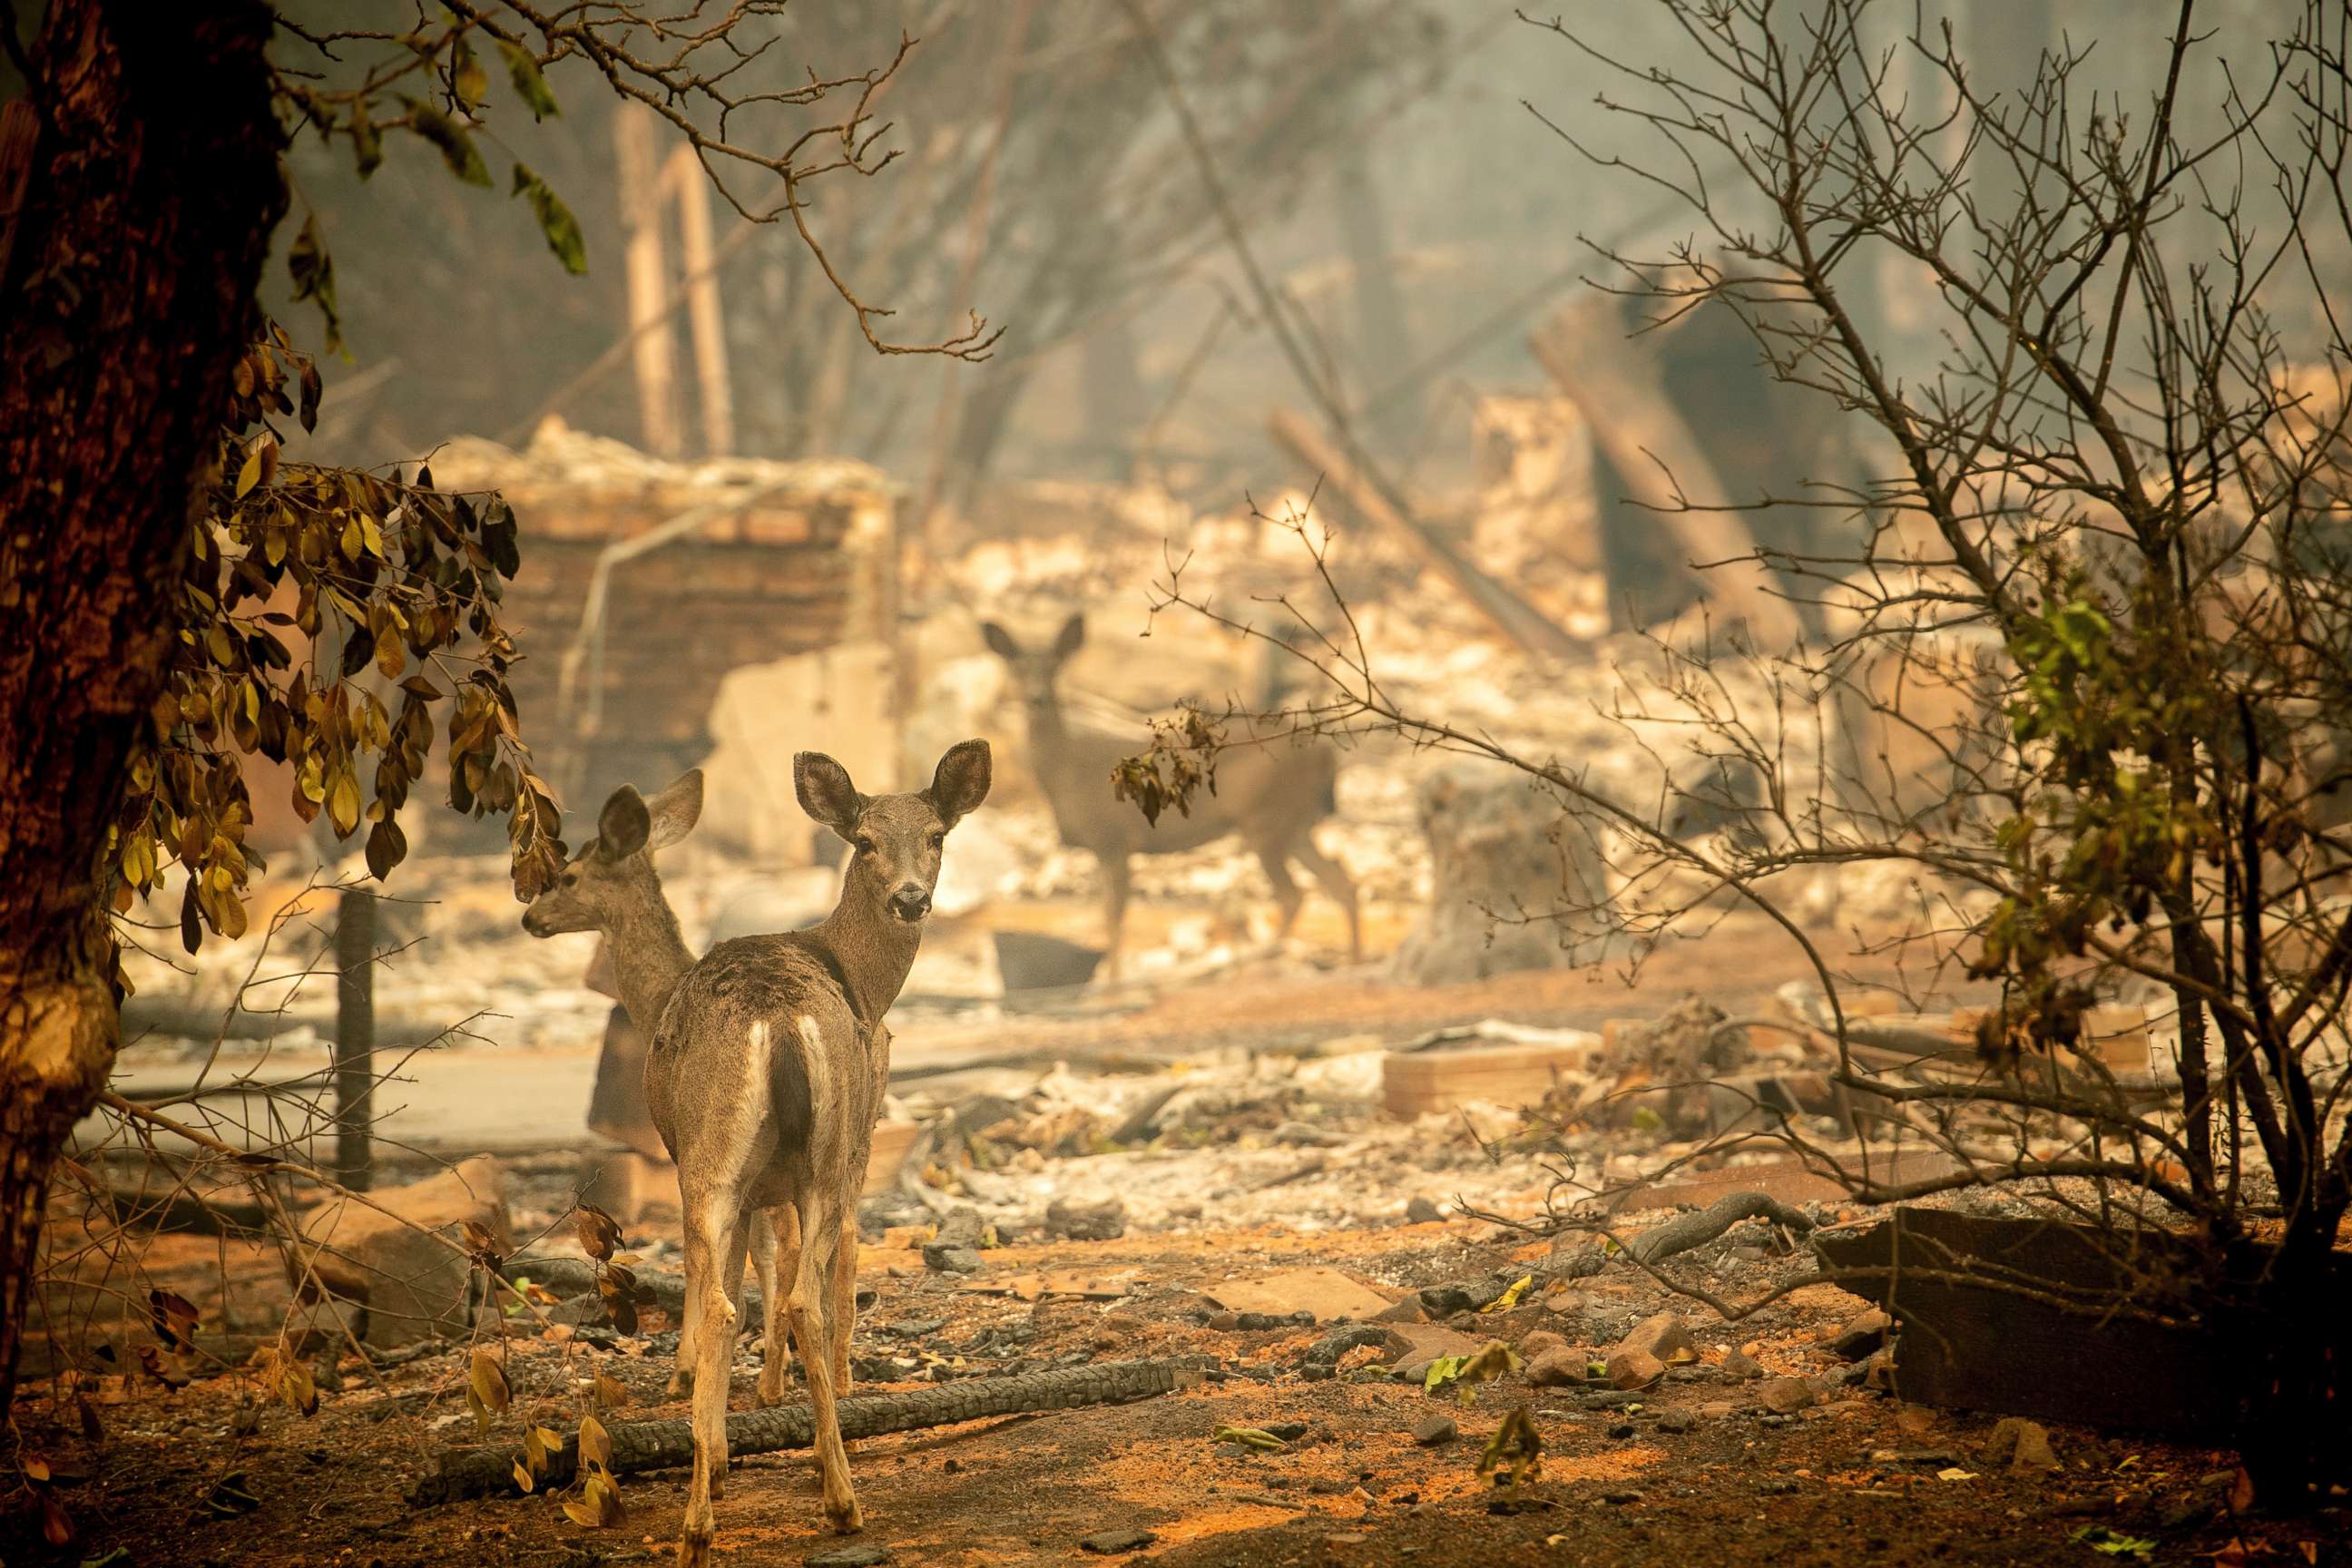 https://s.abcnews.com/images/US/wildfires-6-ap-er-181112_hpMain.jpg